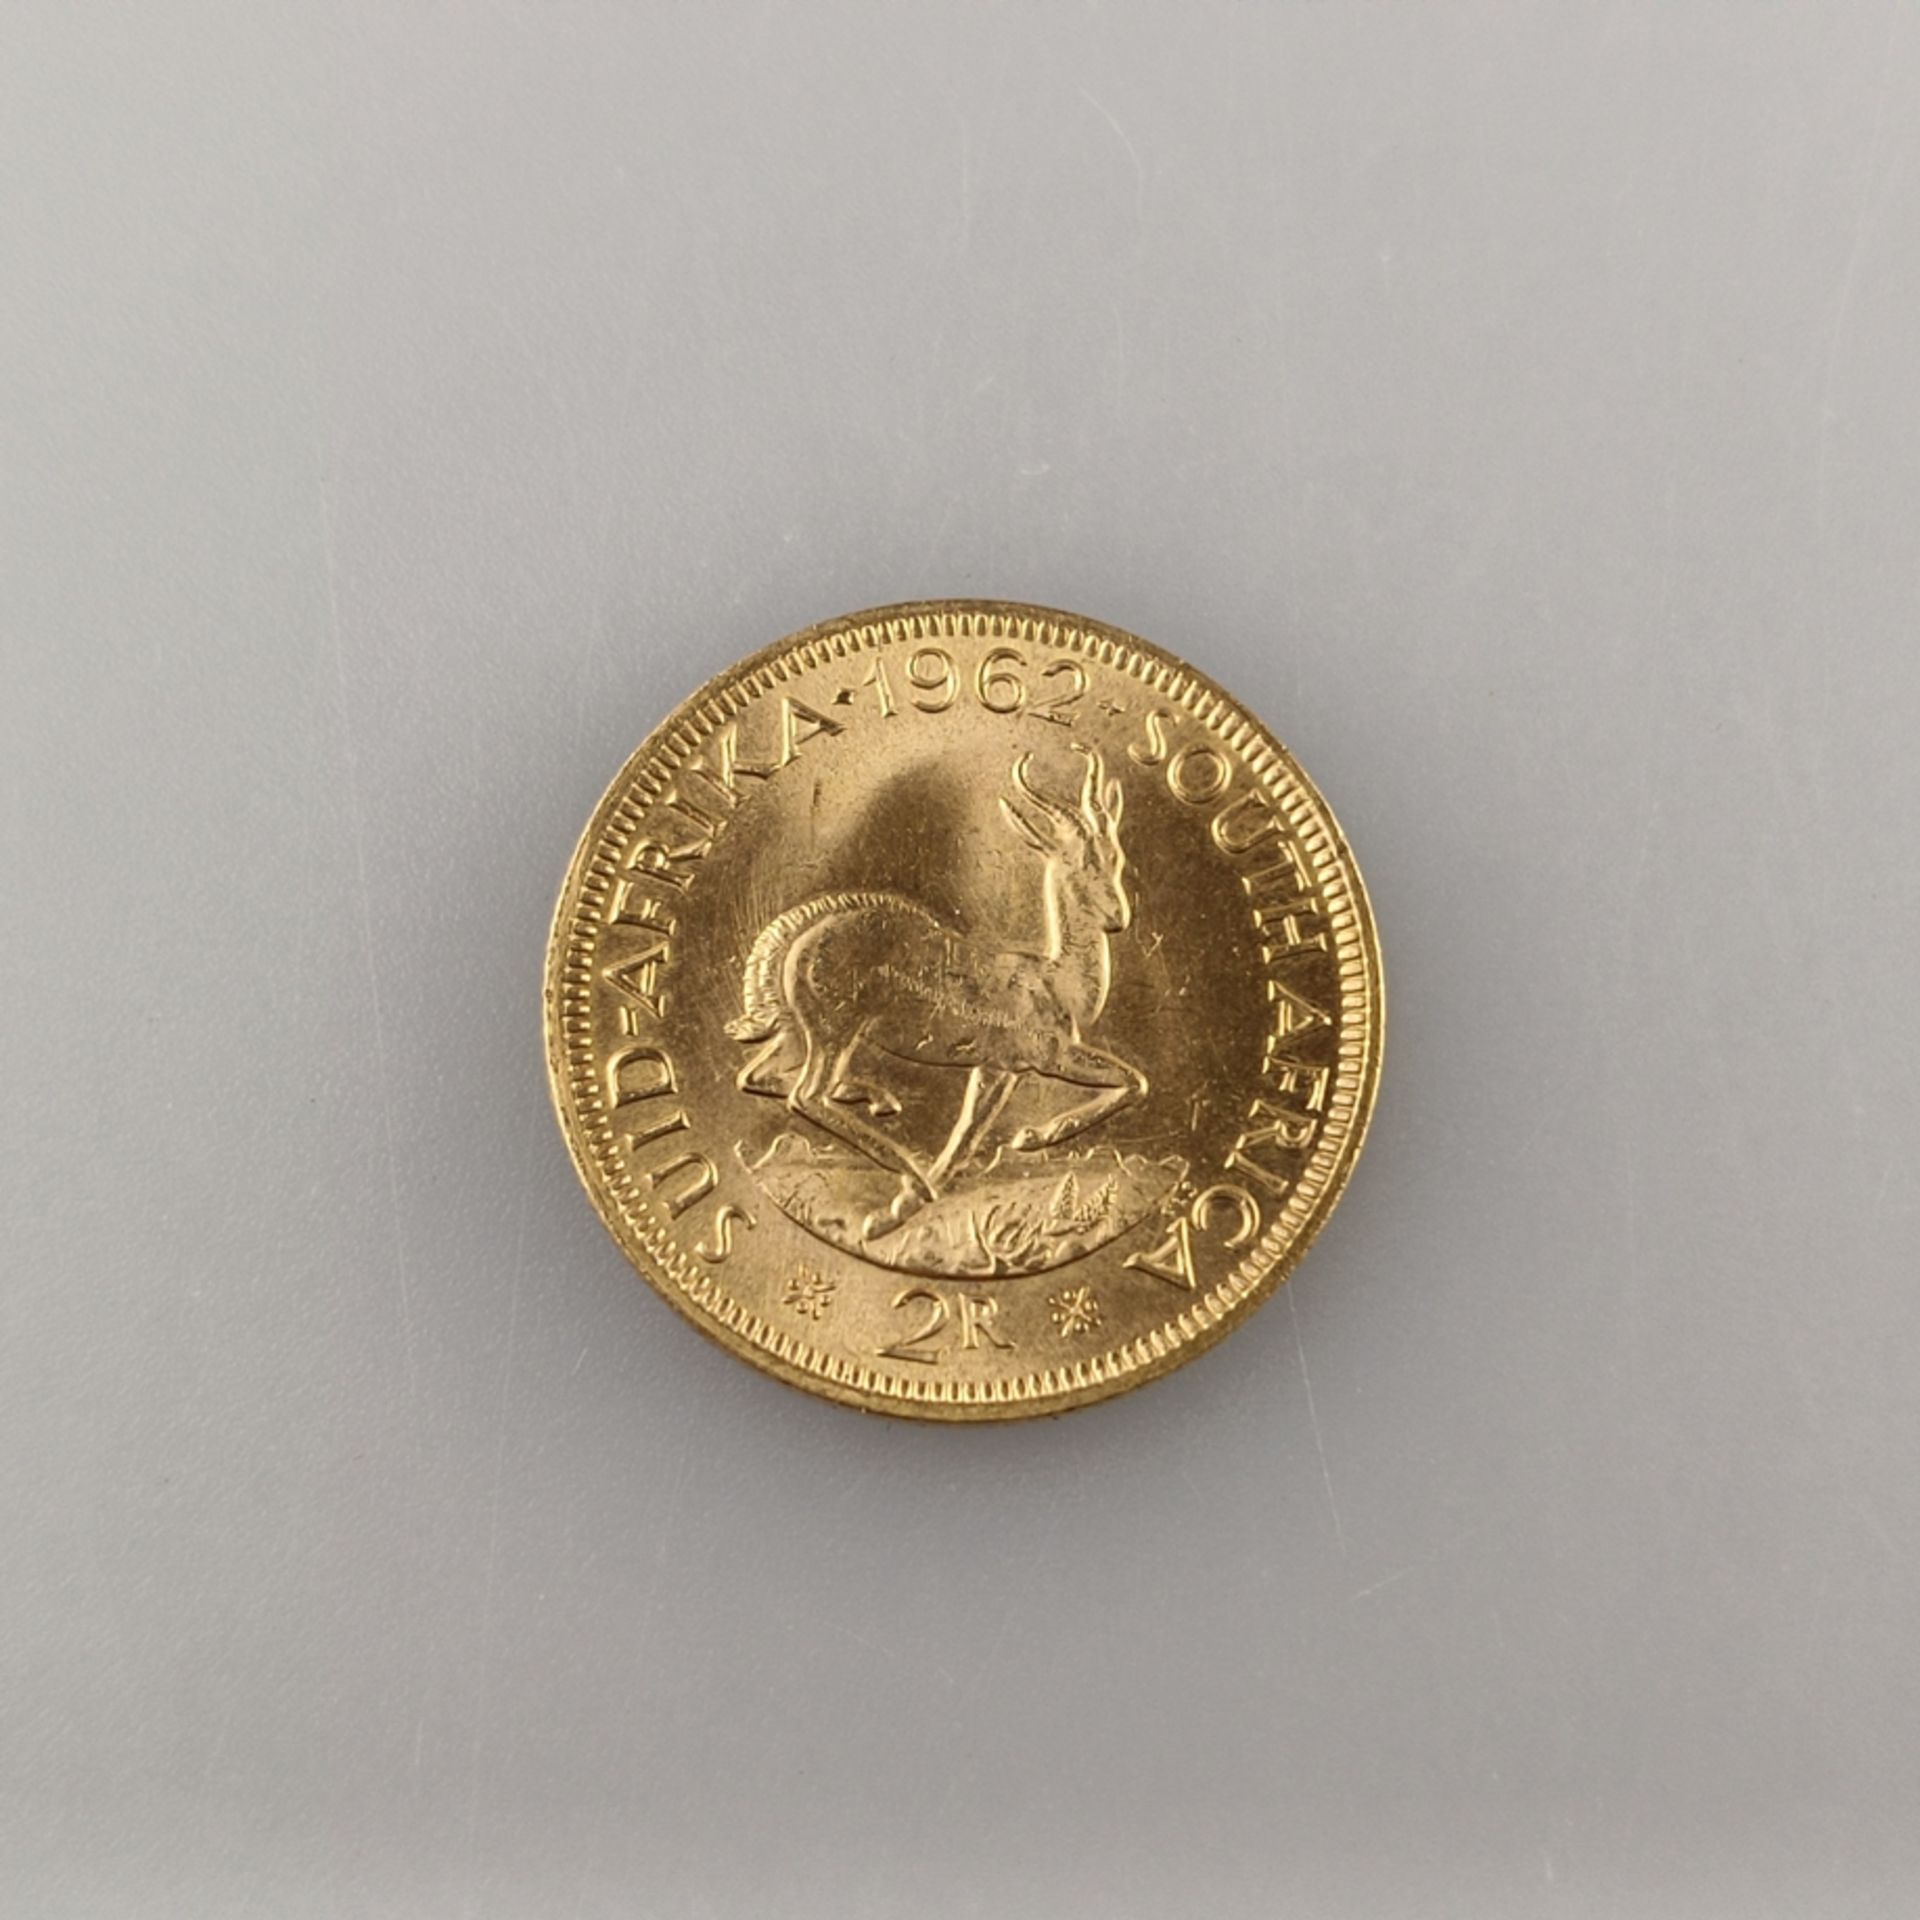 Goldmünze 2 Rand 1962 - Südafrika, Jan van Riebeeck, Revers: Kap-Springbock, 916/000 Gold, Dm. 22 m - Bild 2 aus 3